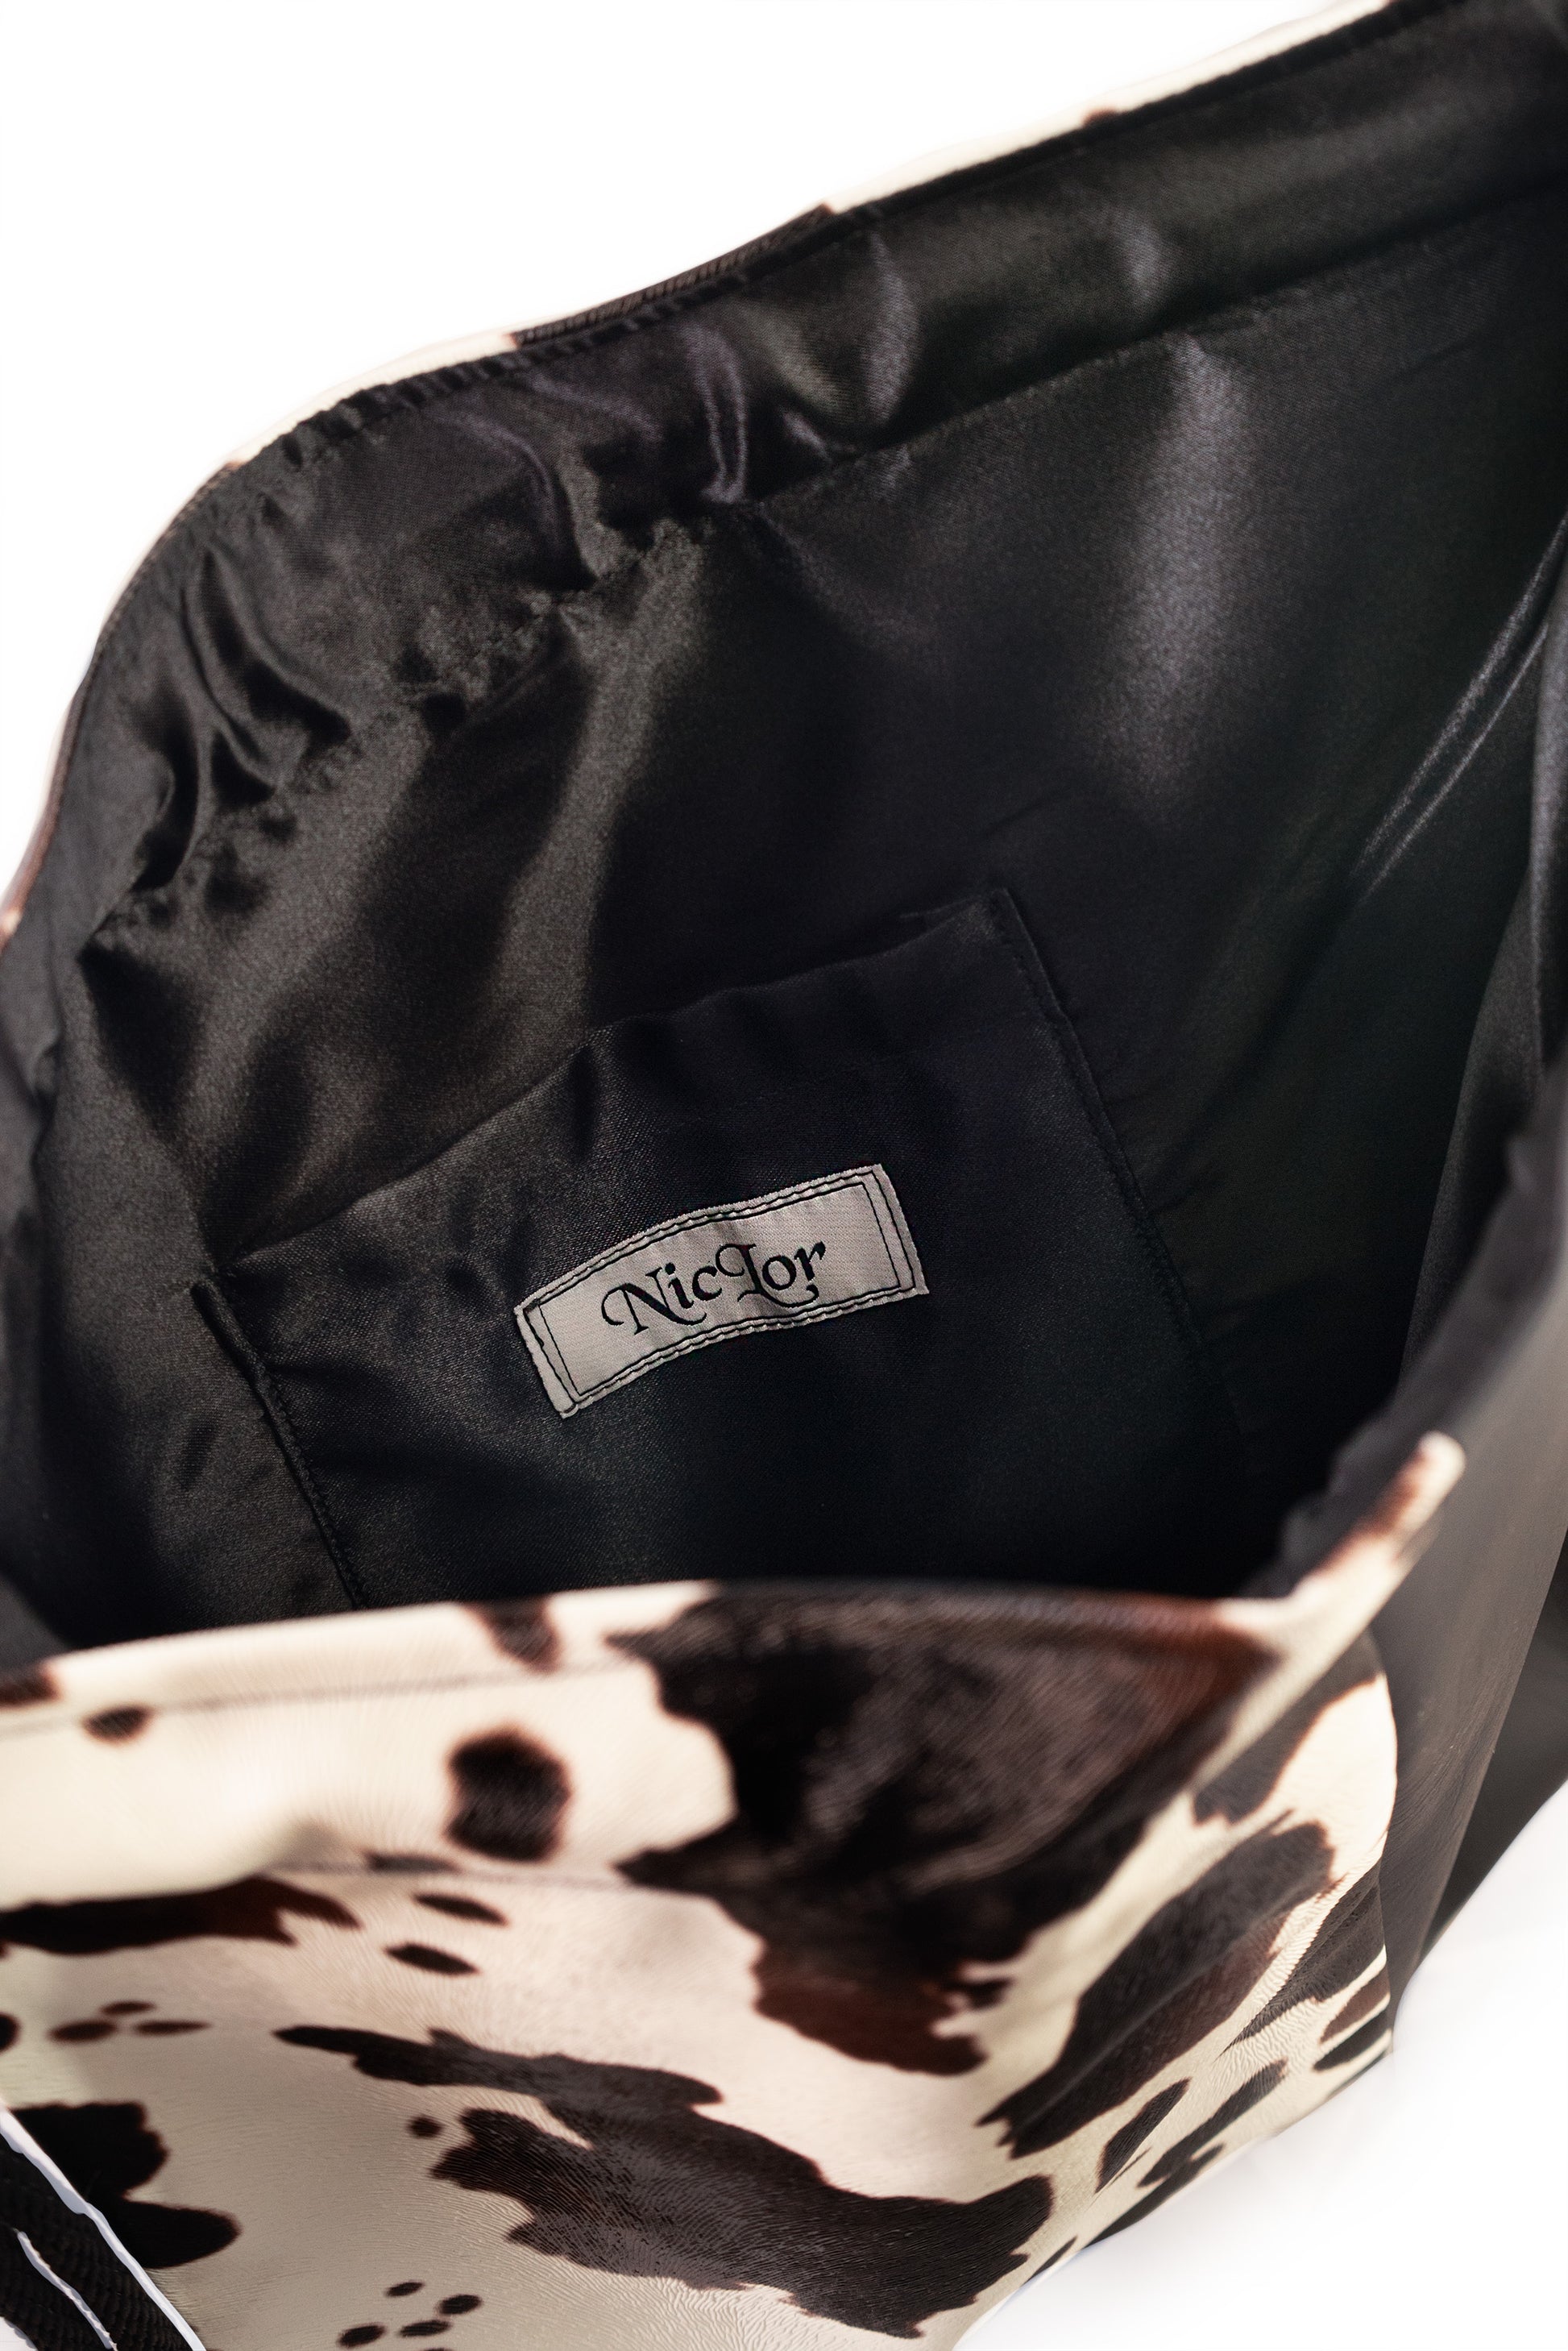 Vegan leather backpack VICTORIA'S SECRET Black in Vegan leather